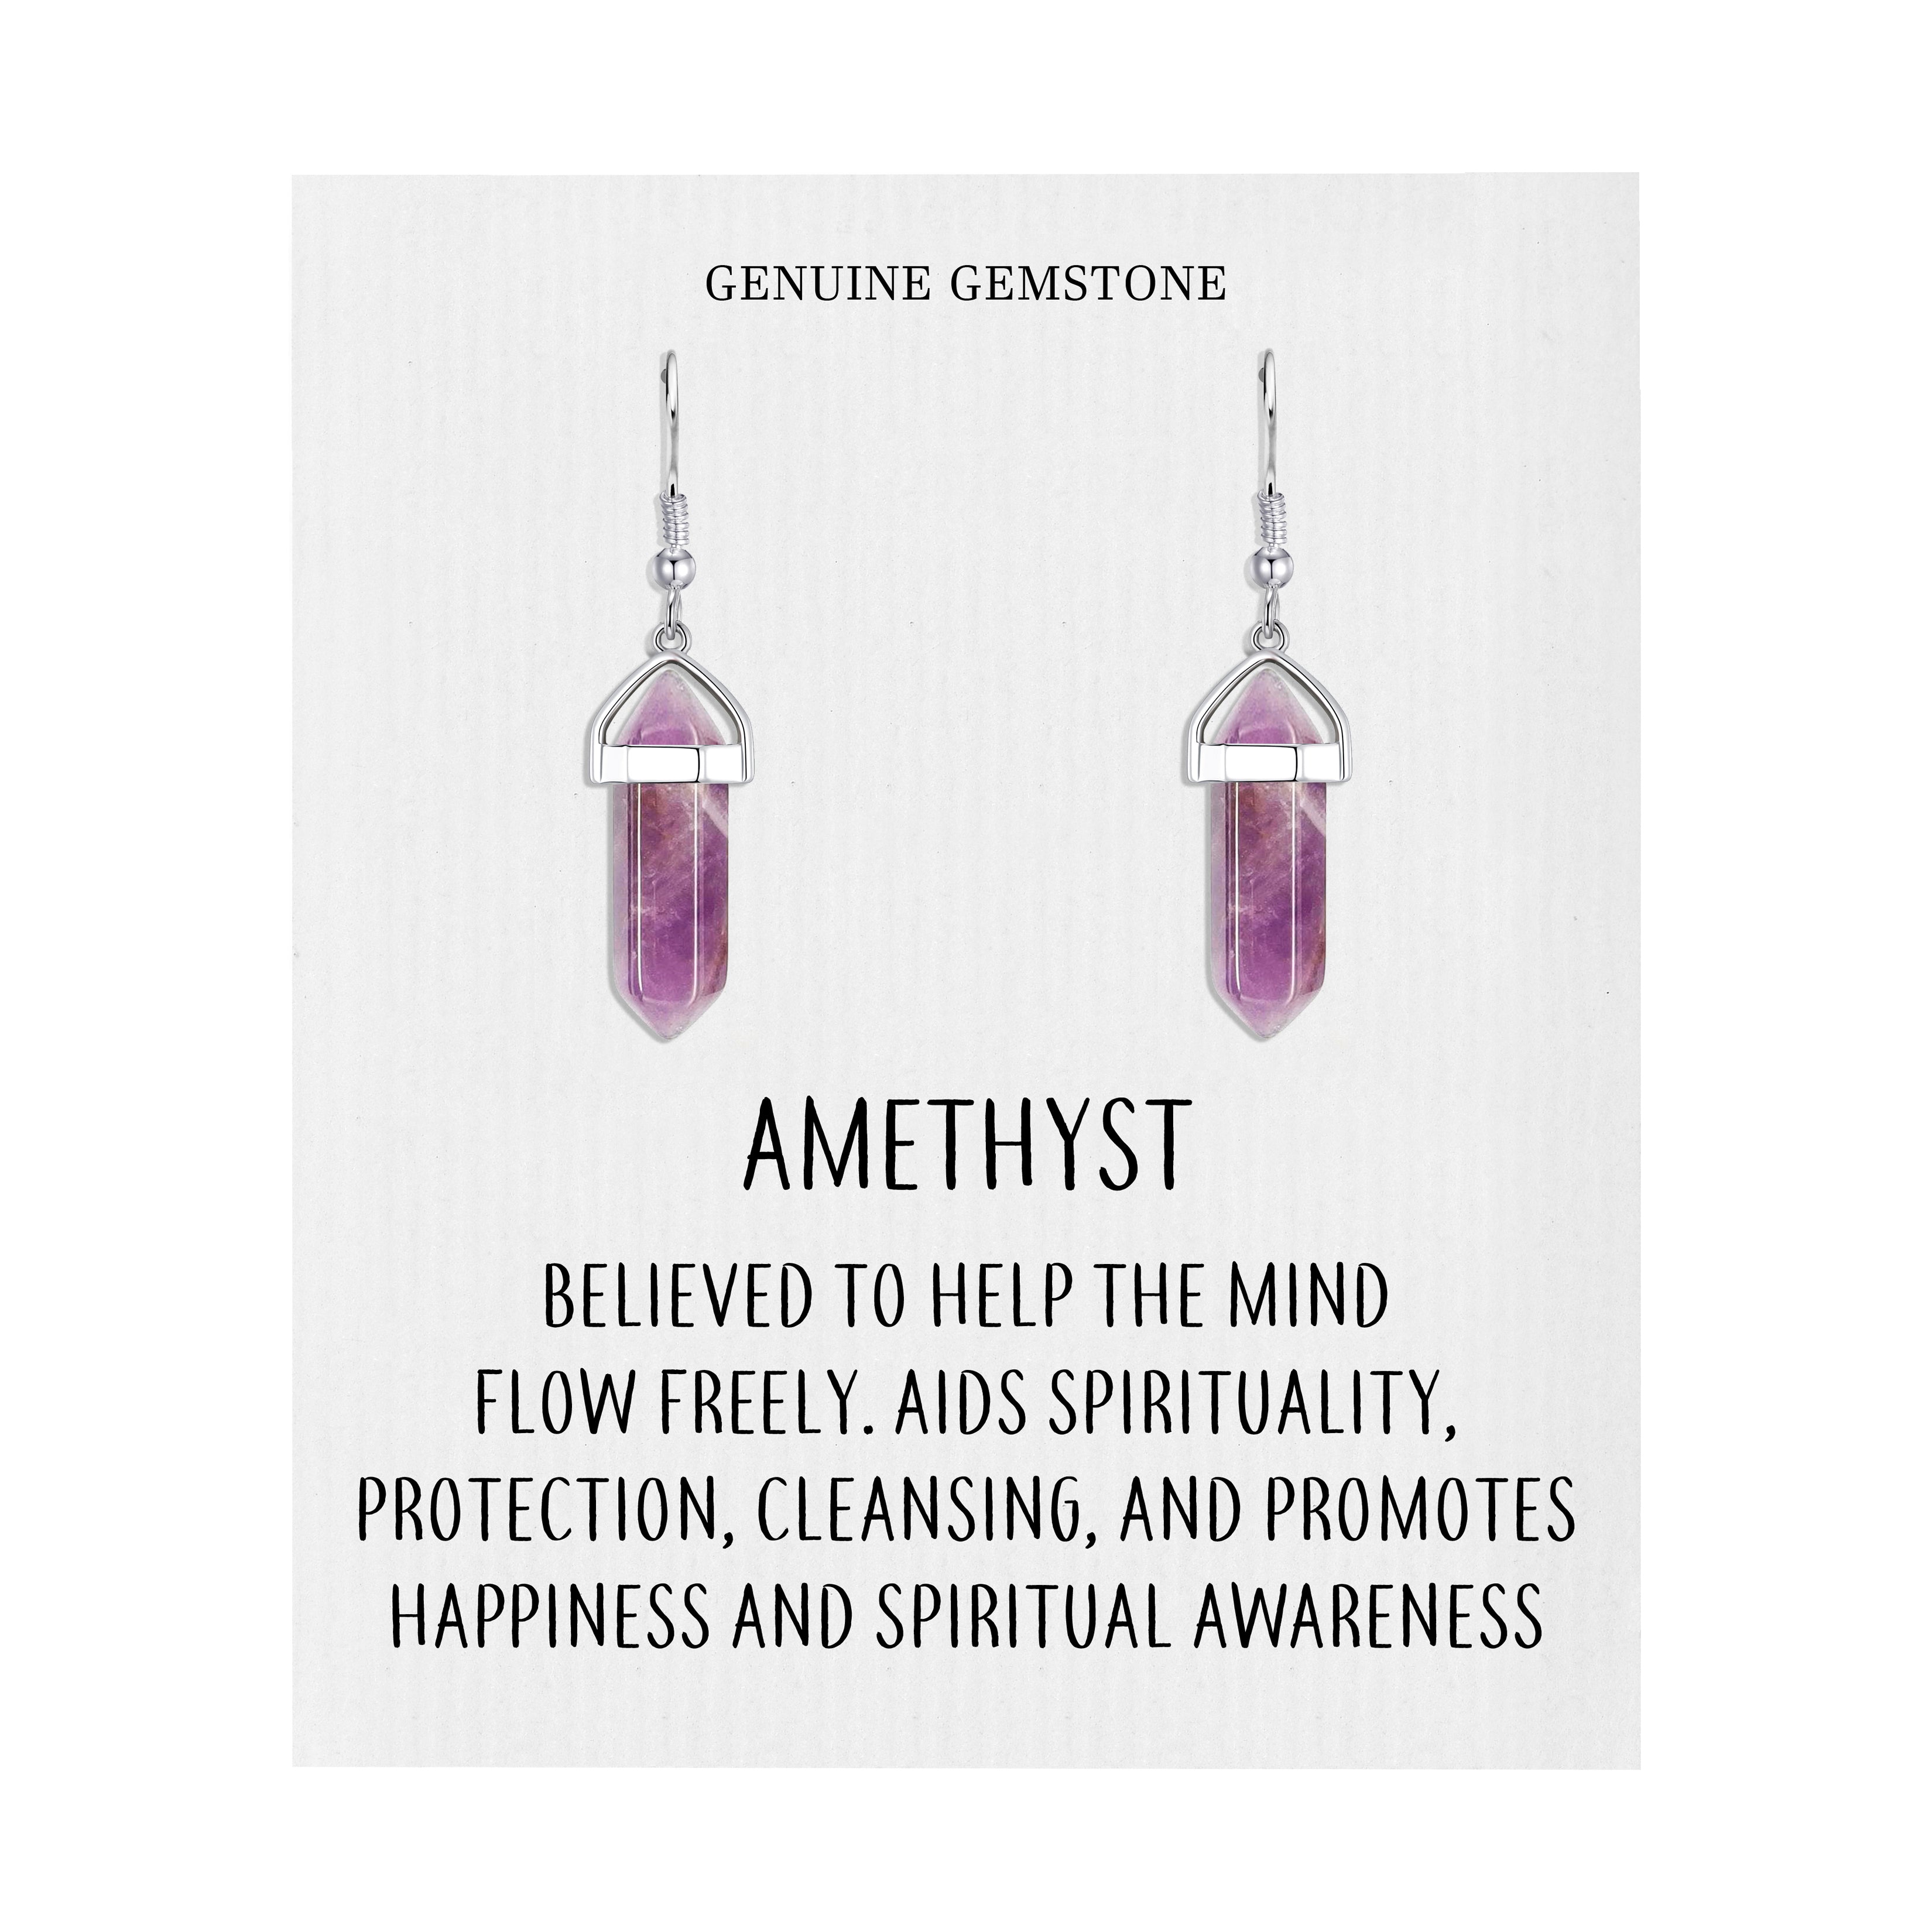 Amethyst Gemstone Drop Earrings with Quote Card by Philip Jones Jewellery